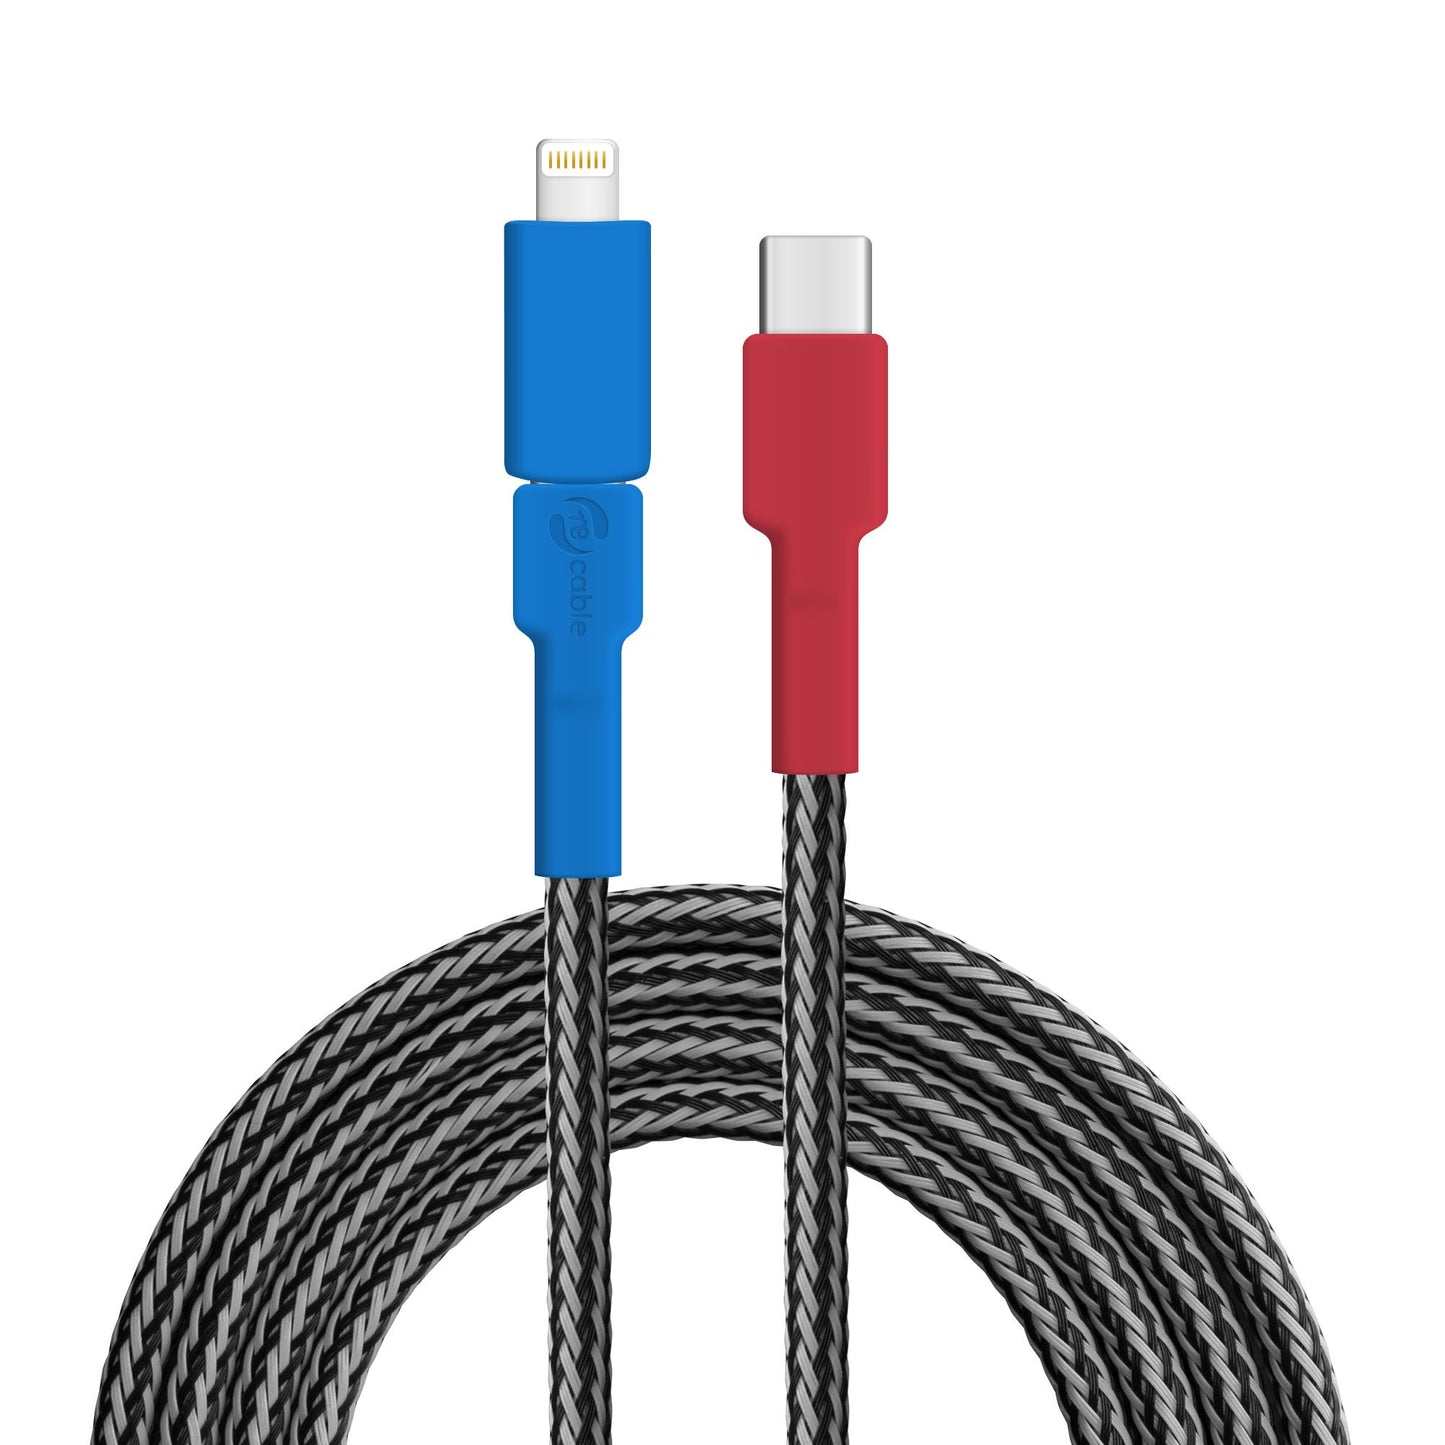 USB-Kabel, Design: Helmkasuar, Anschlüsse: USB C auf Micro-USB mit Lightning Adapter (verbunden)